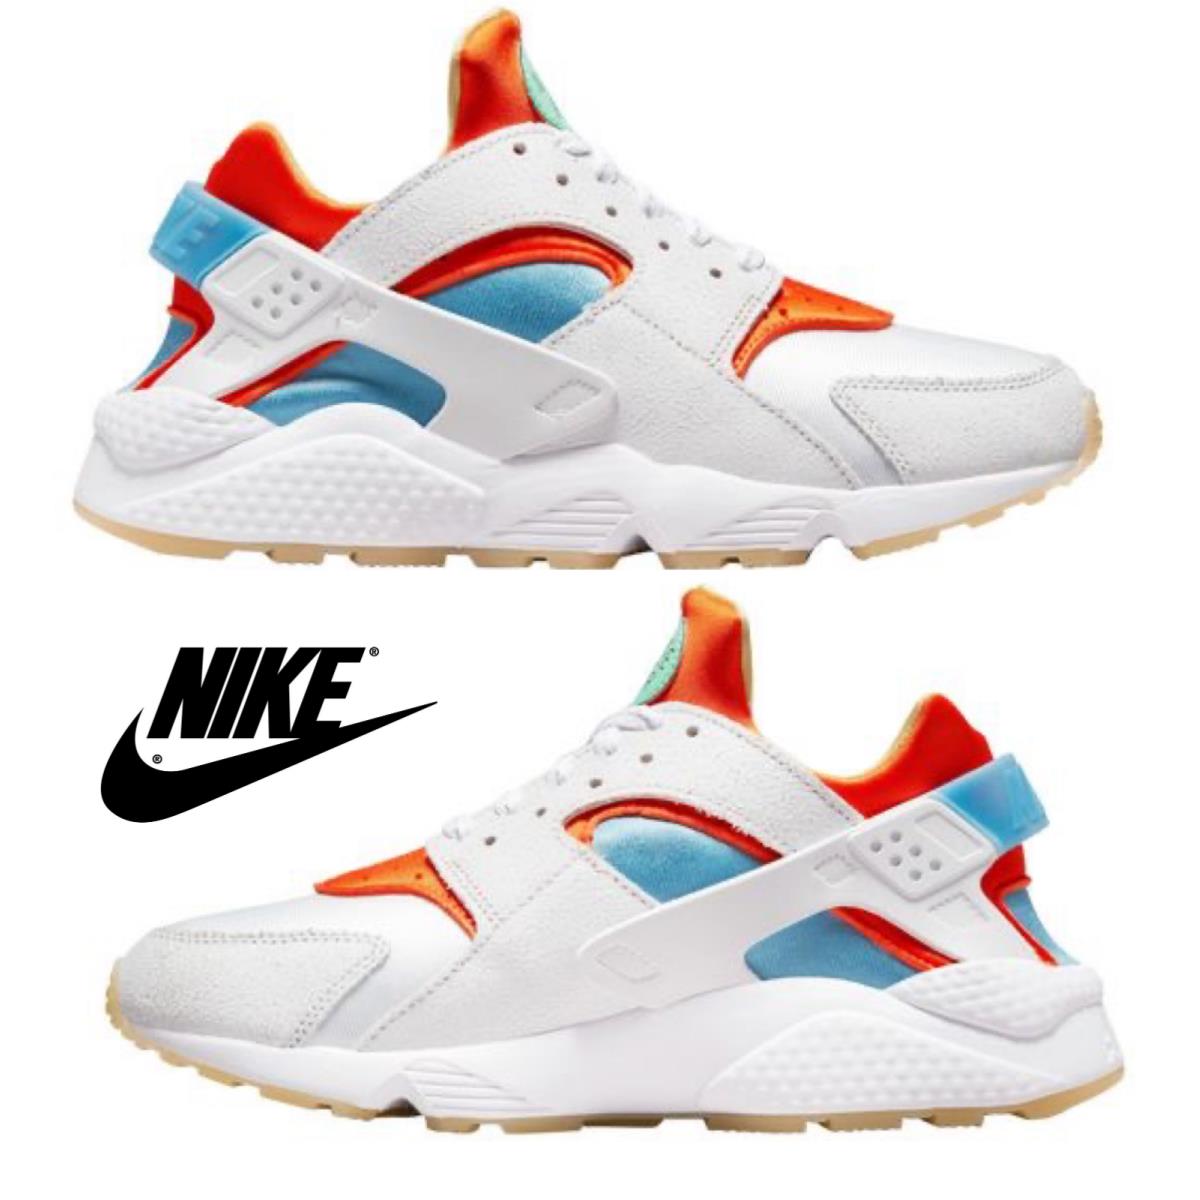 Nike Air Huarache Men`s Casual Shoes Running Athletic Comfort Sport White Orange - White , White/Orange/Multi Manufacturer